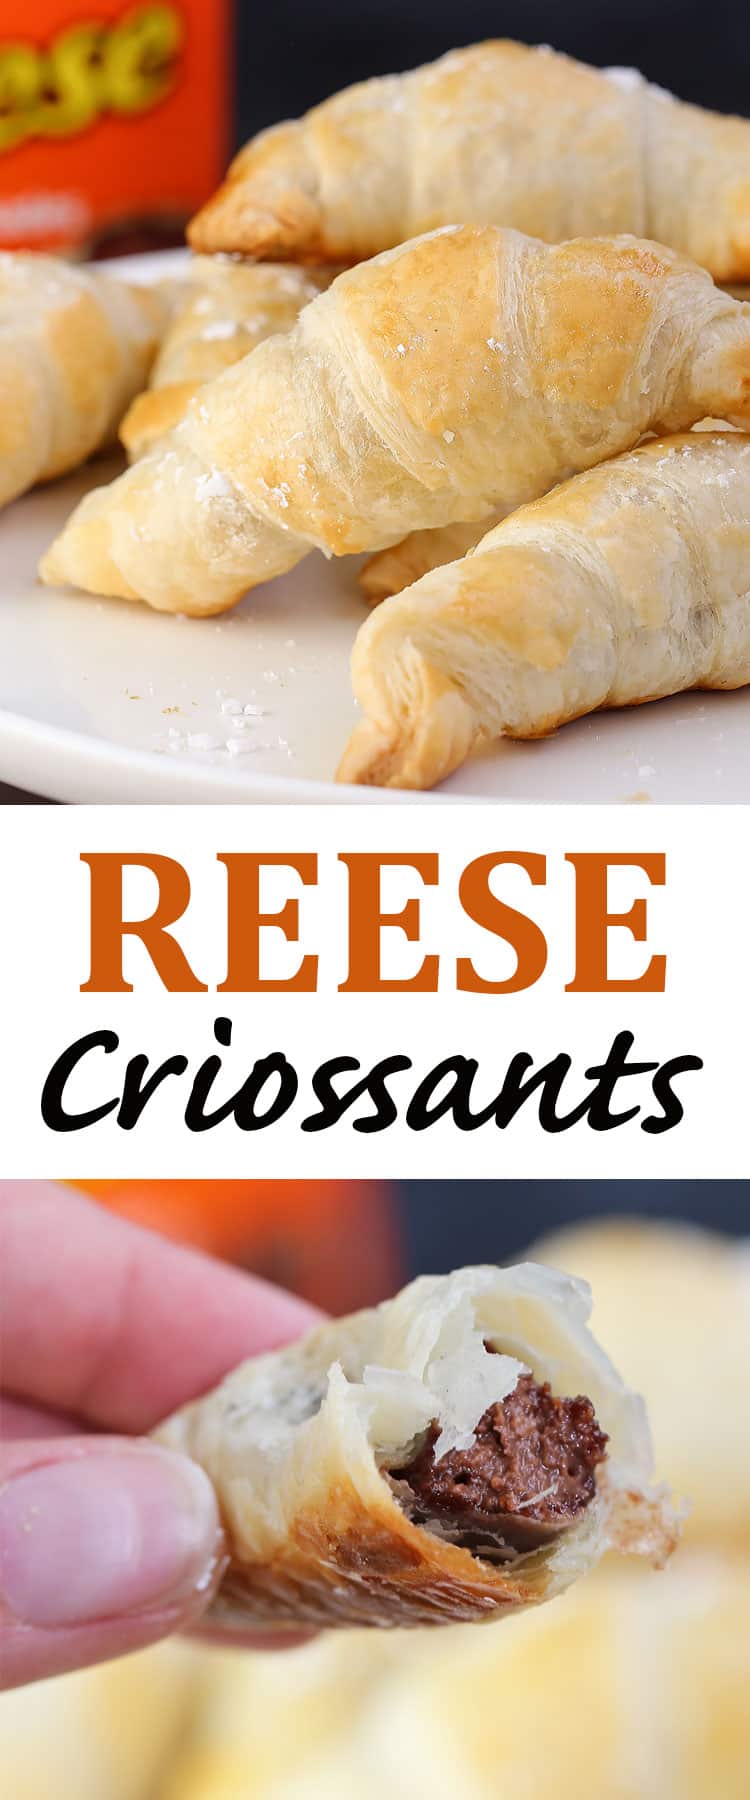 reese criossants recipe